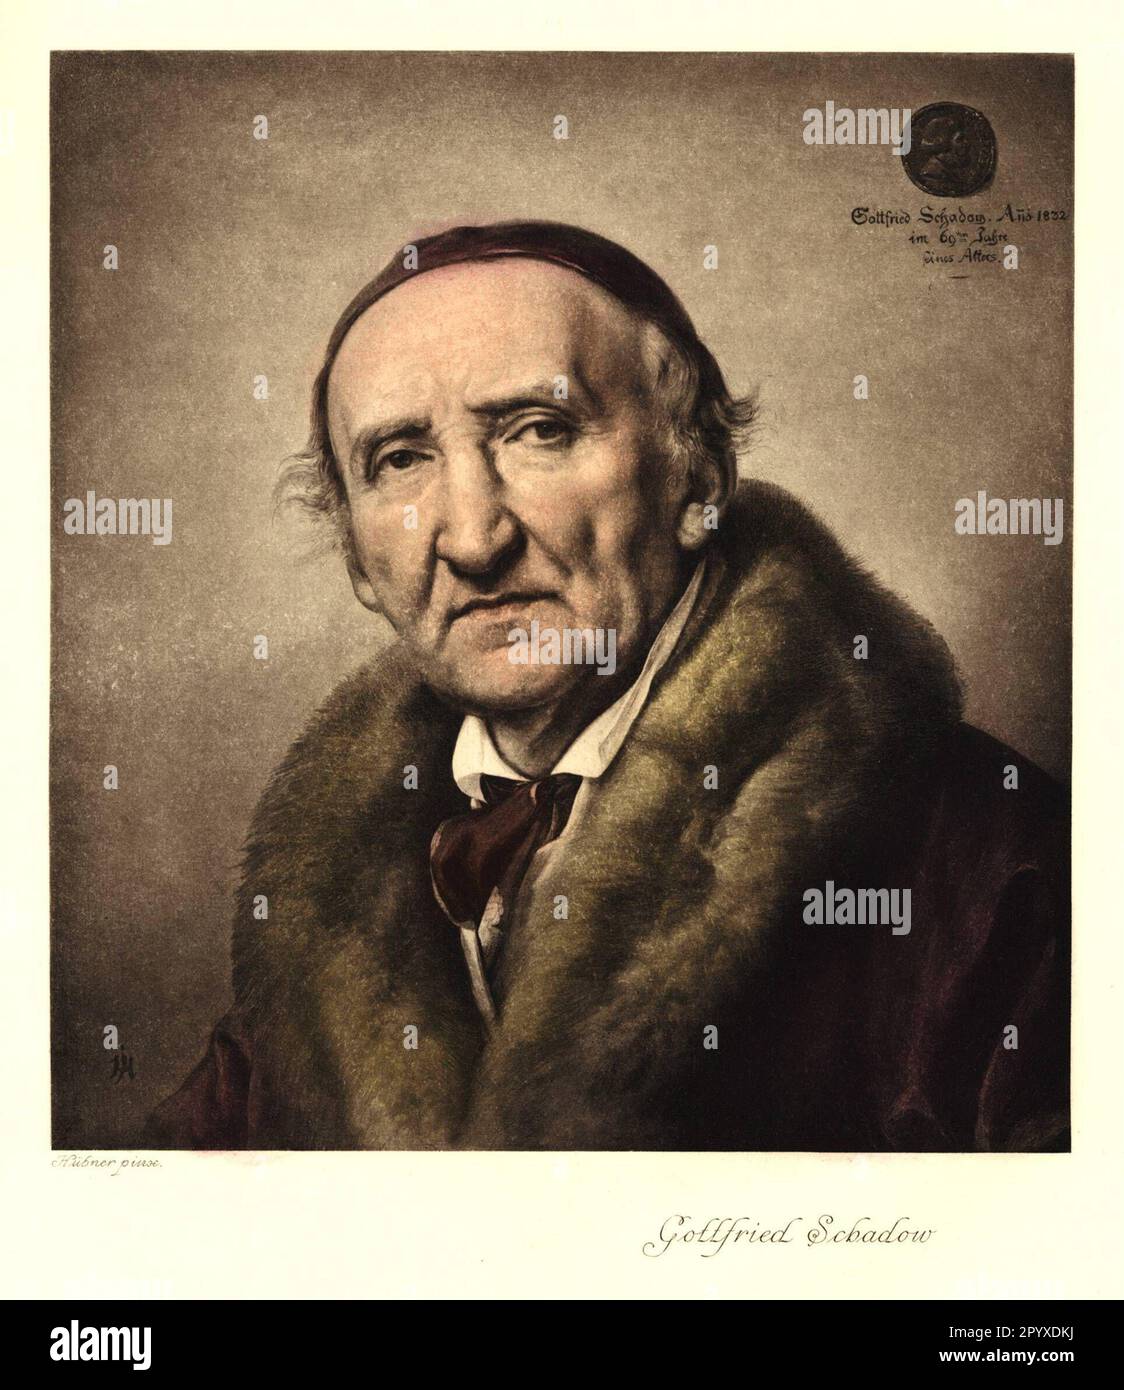 Johann Gottfried von Schadow (1764-1850), scultore e grafico tedesco. Pittura di Julius Hübner, studente di Schadow. Foto: Heliogravure, Corpus Imaginum, Hanfstaengl Collection. [traduzione automatica] Foto Stock